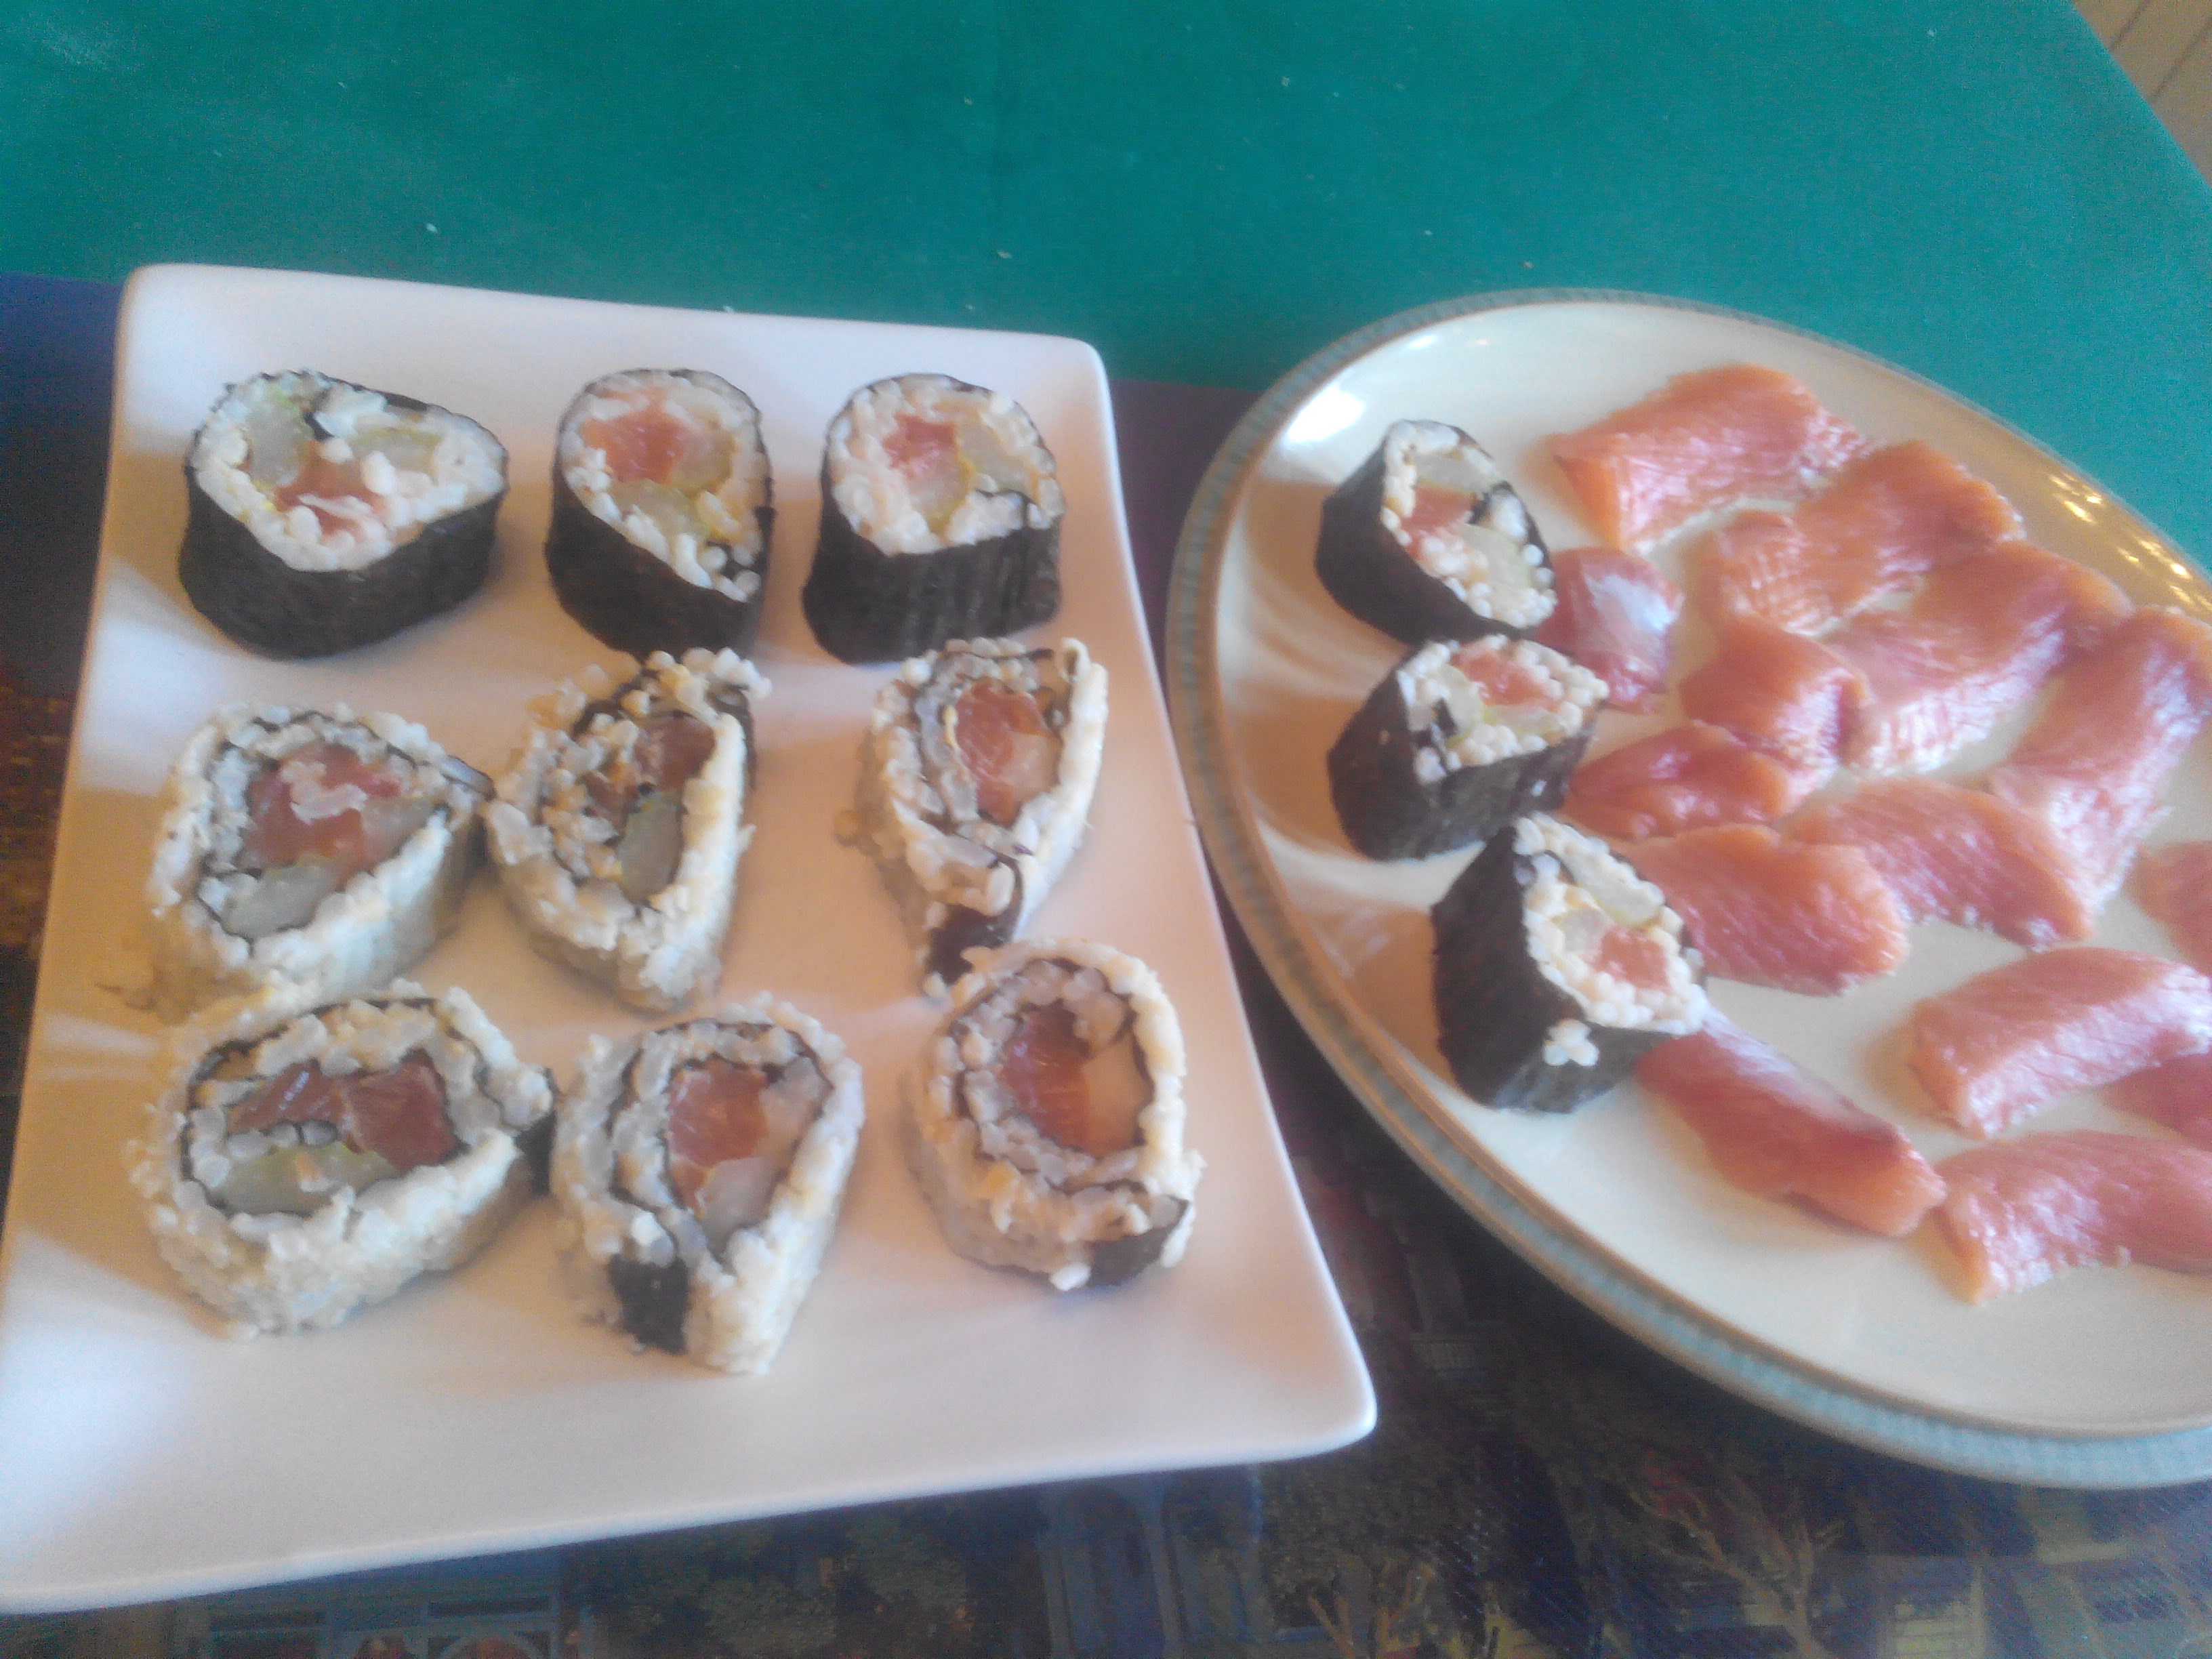 Some sushi